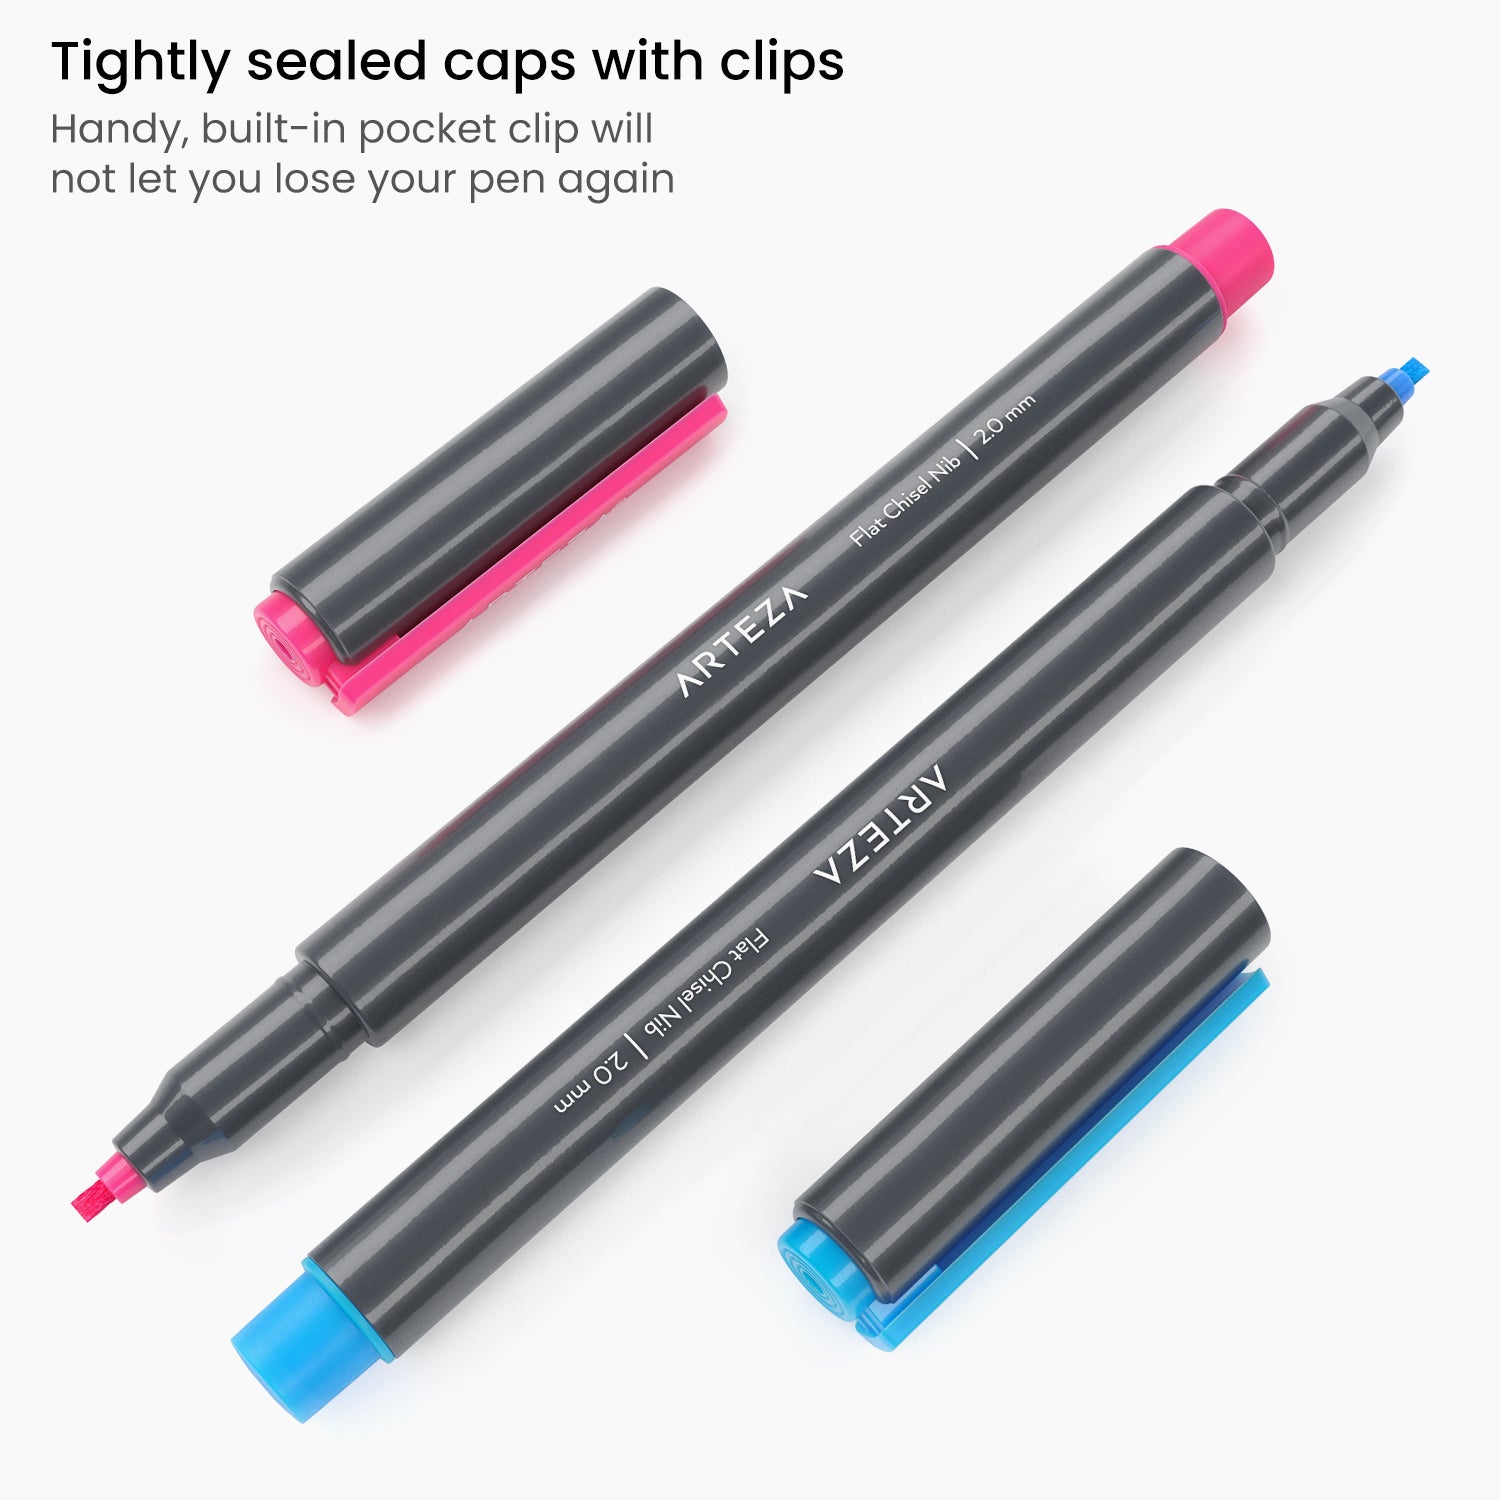 Calligraphy Pen, Assorted Colors, Flat Chisel Nib - Set of 12